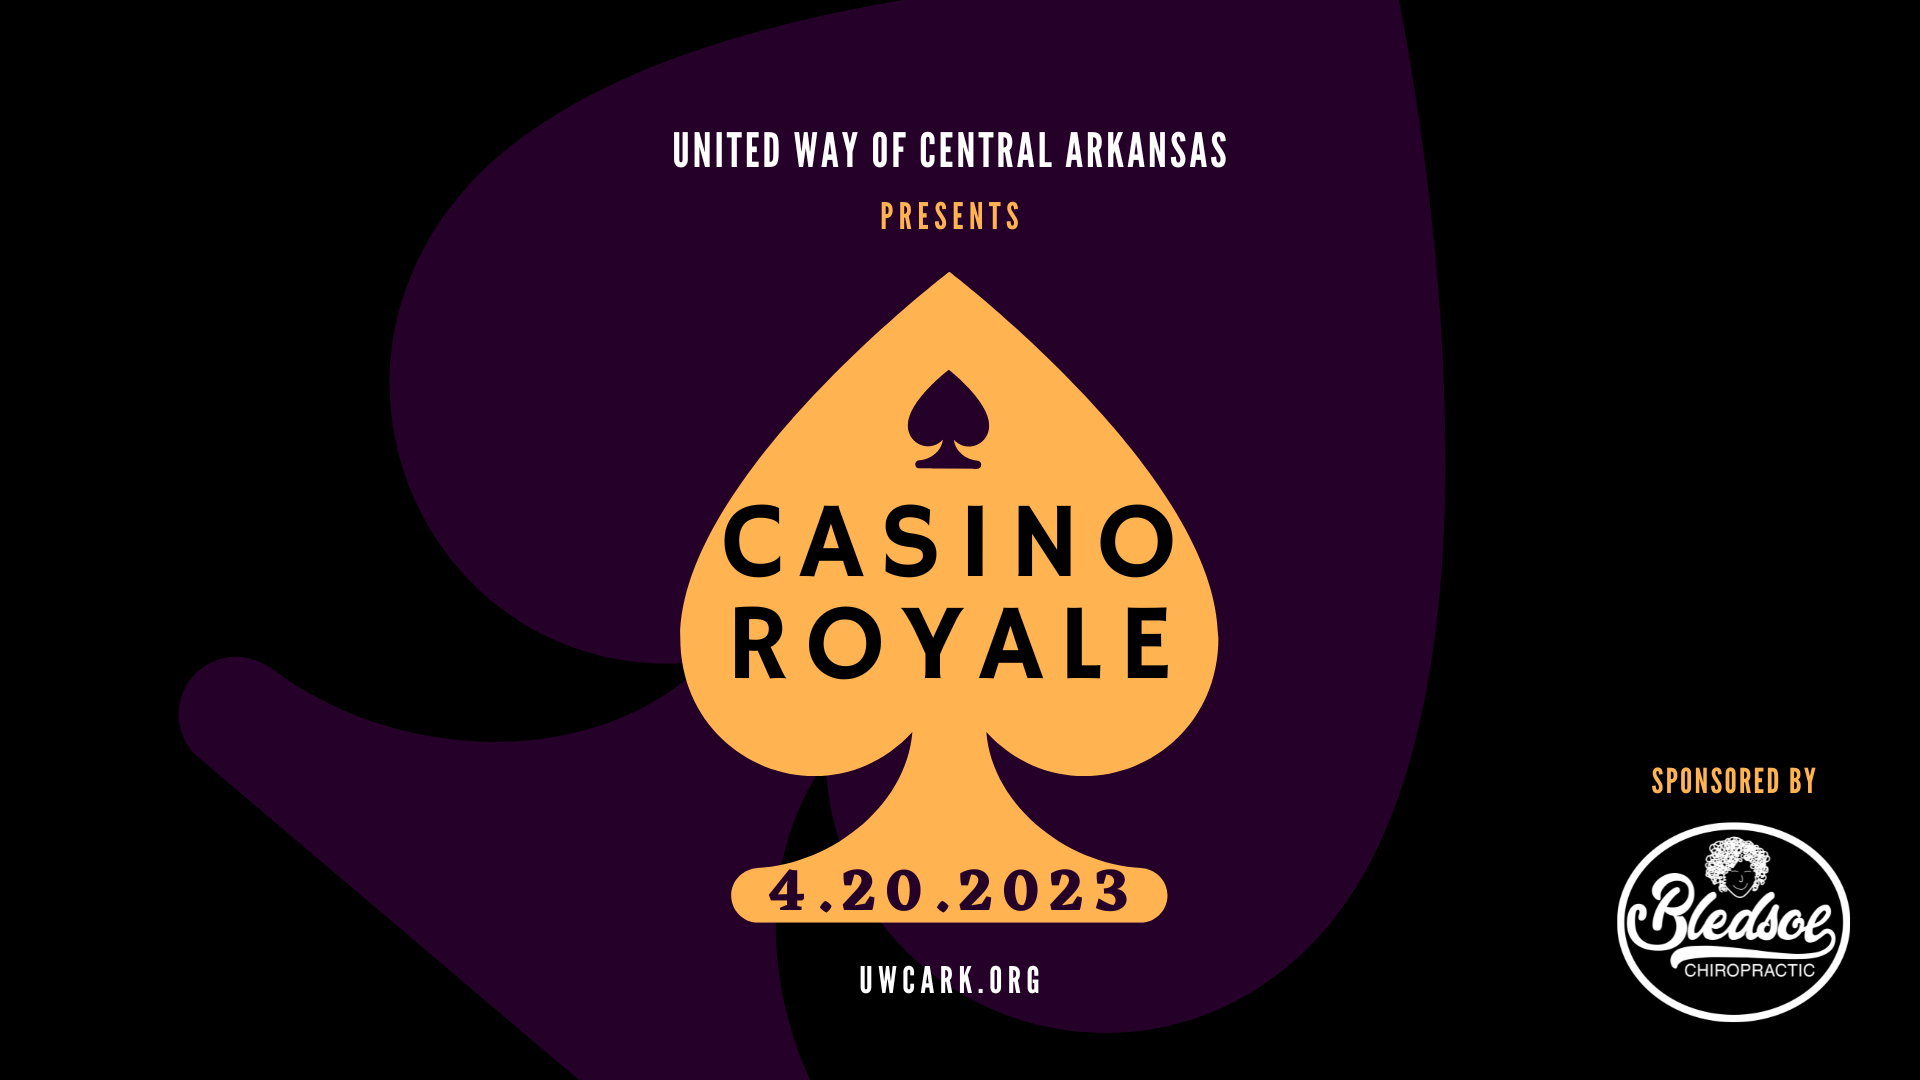 Casino Night 2023 details